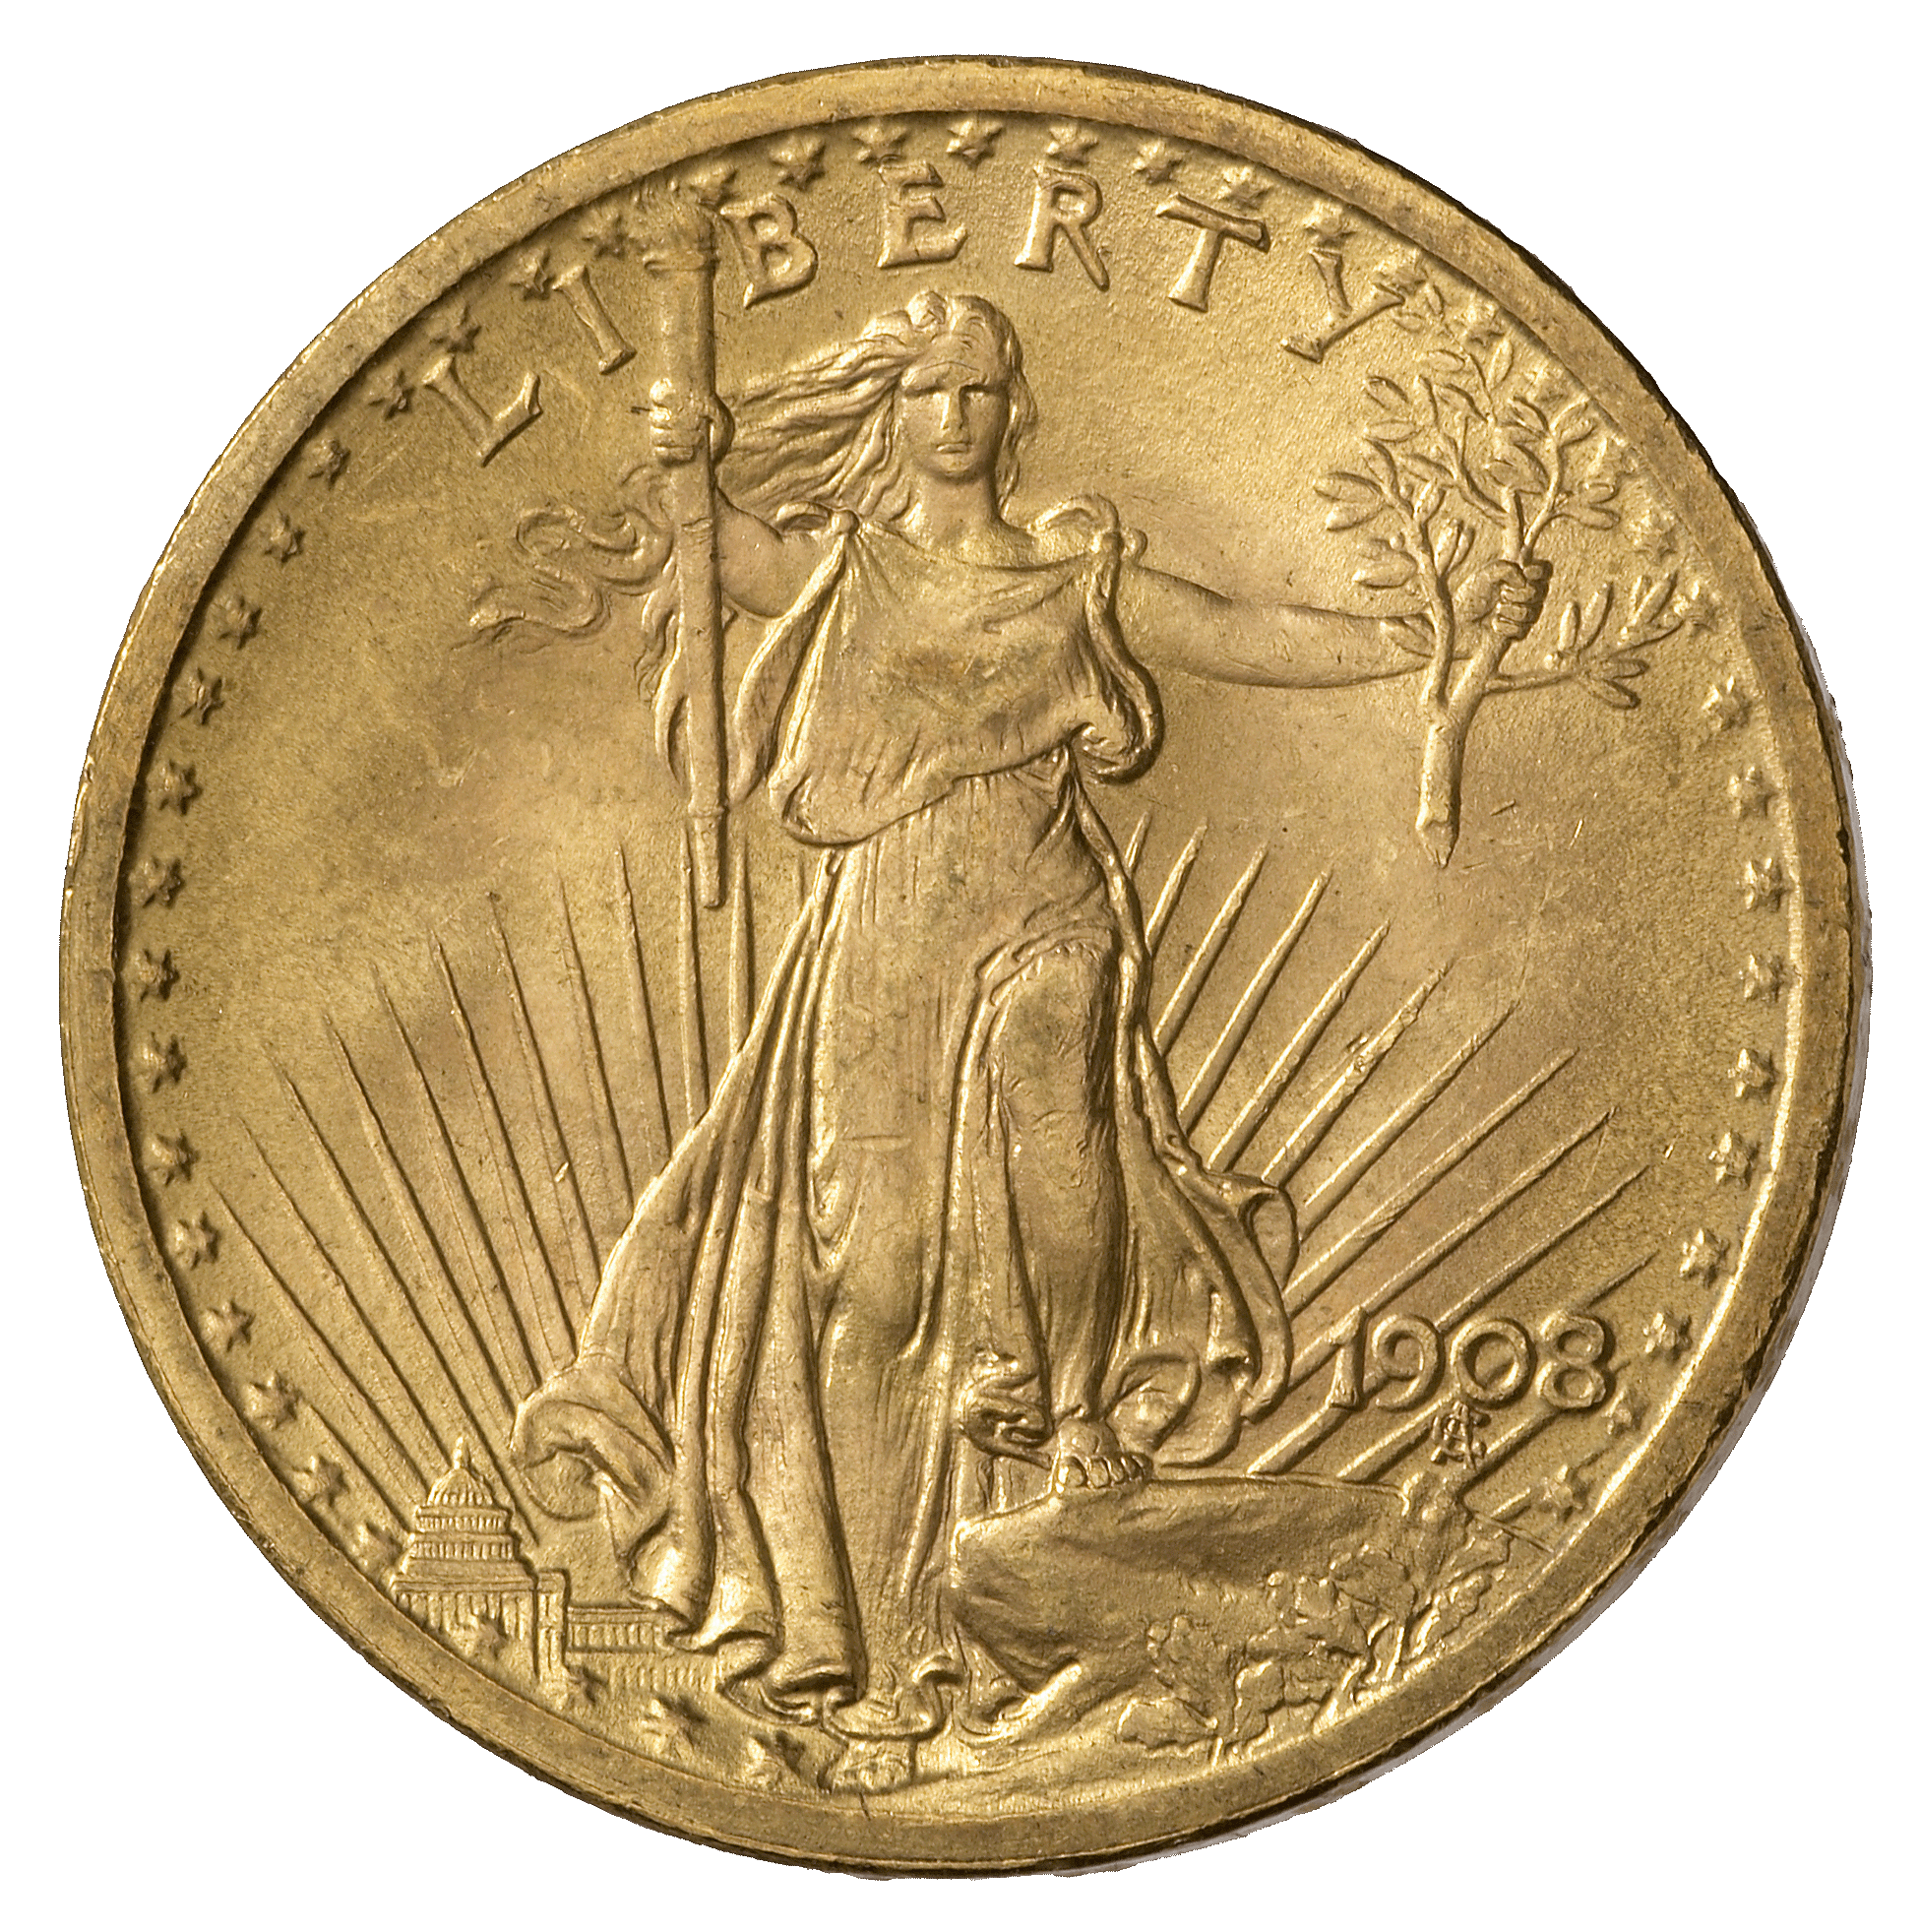 United States of America, 20 Dollar 1908 (obverse)